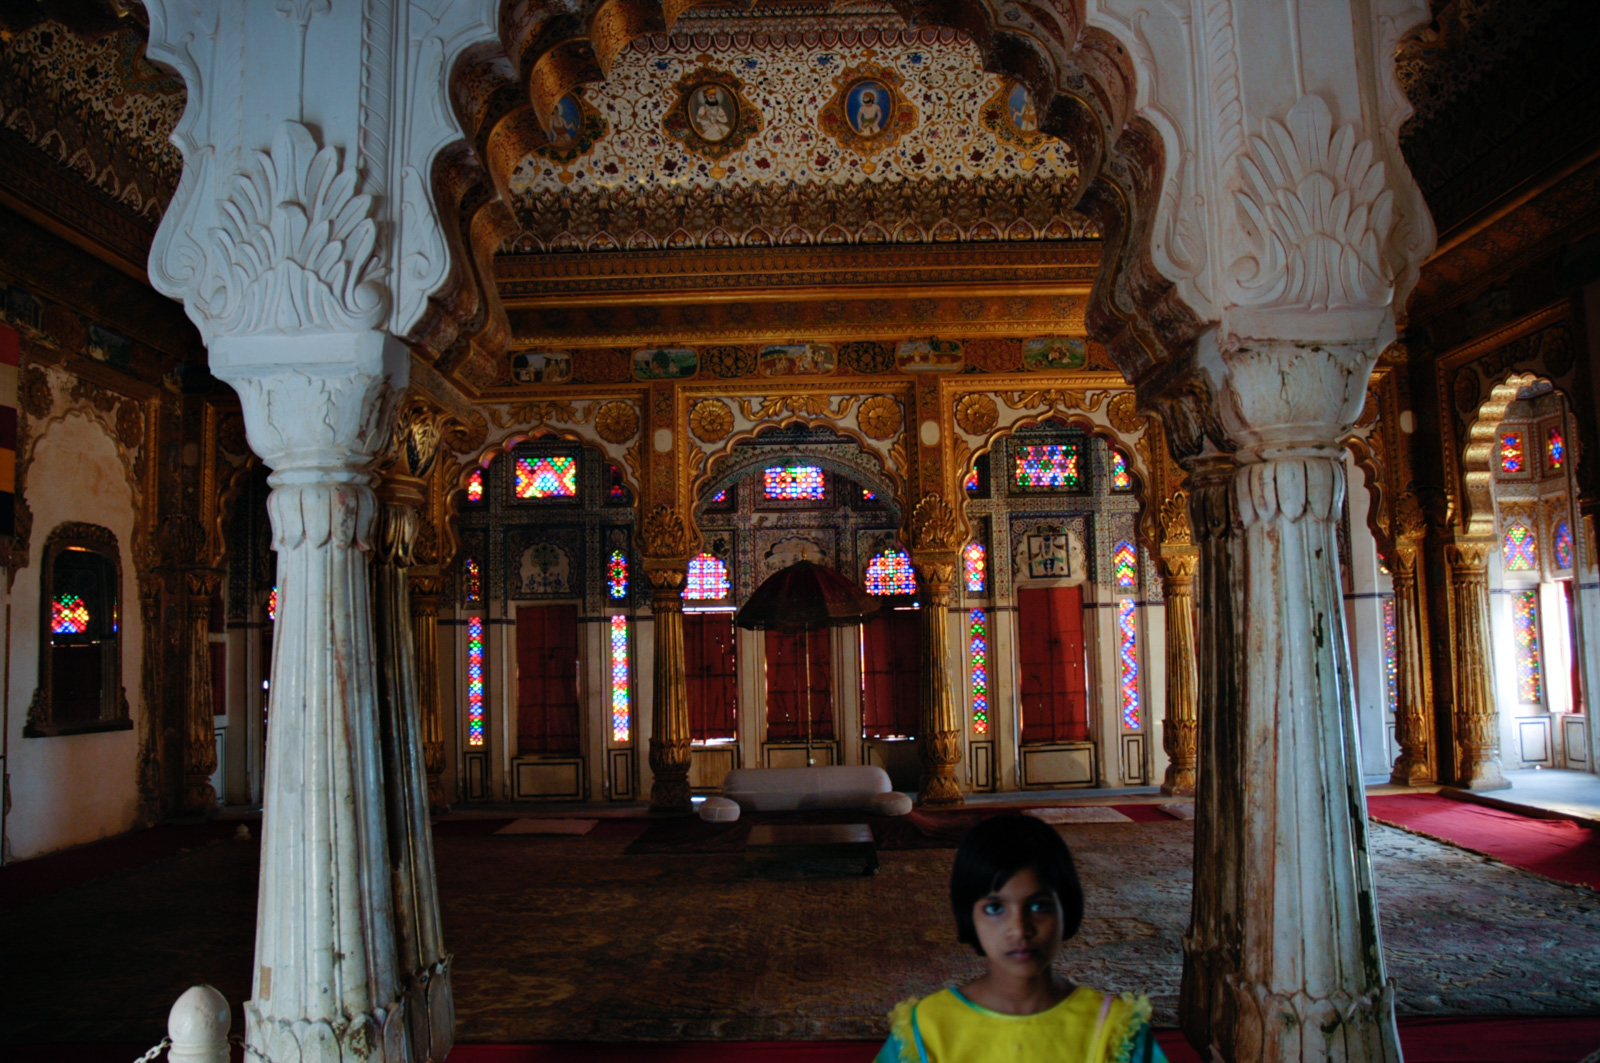  Jodhpur, India 2006 